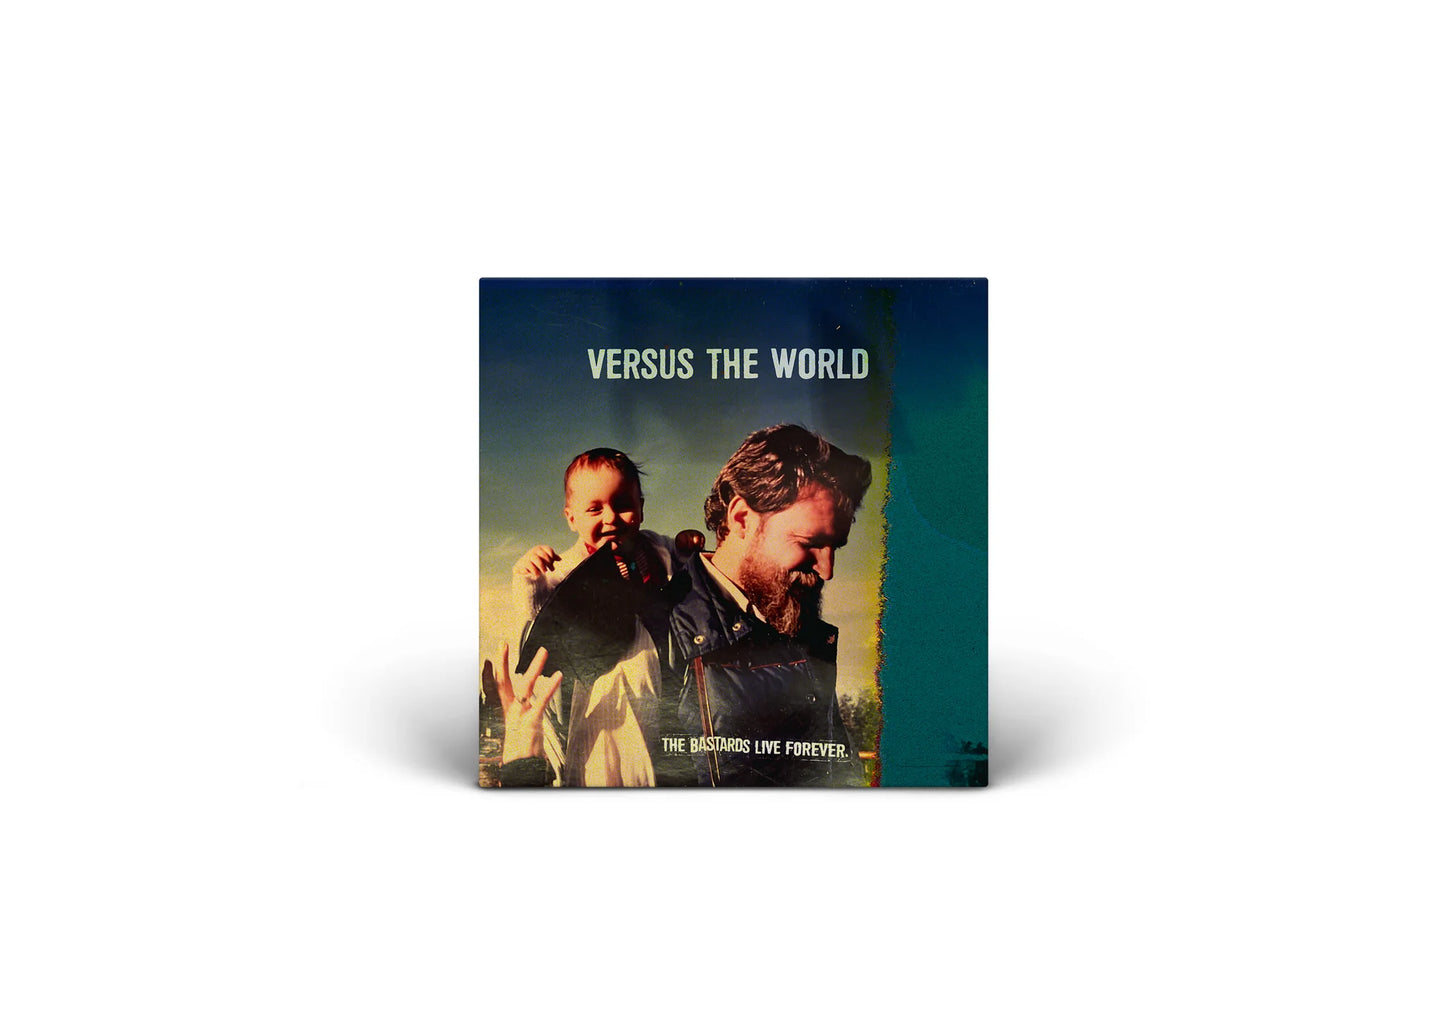 VERSUS THE WORLD - "The Bastards Live Forever" (SBAM) (LP/CD)